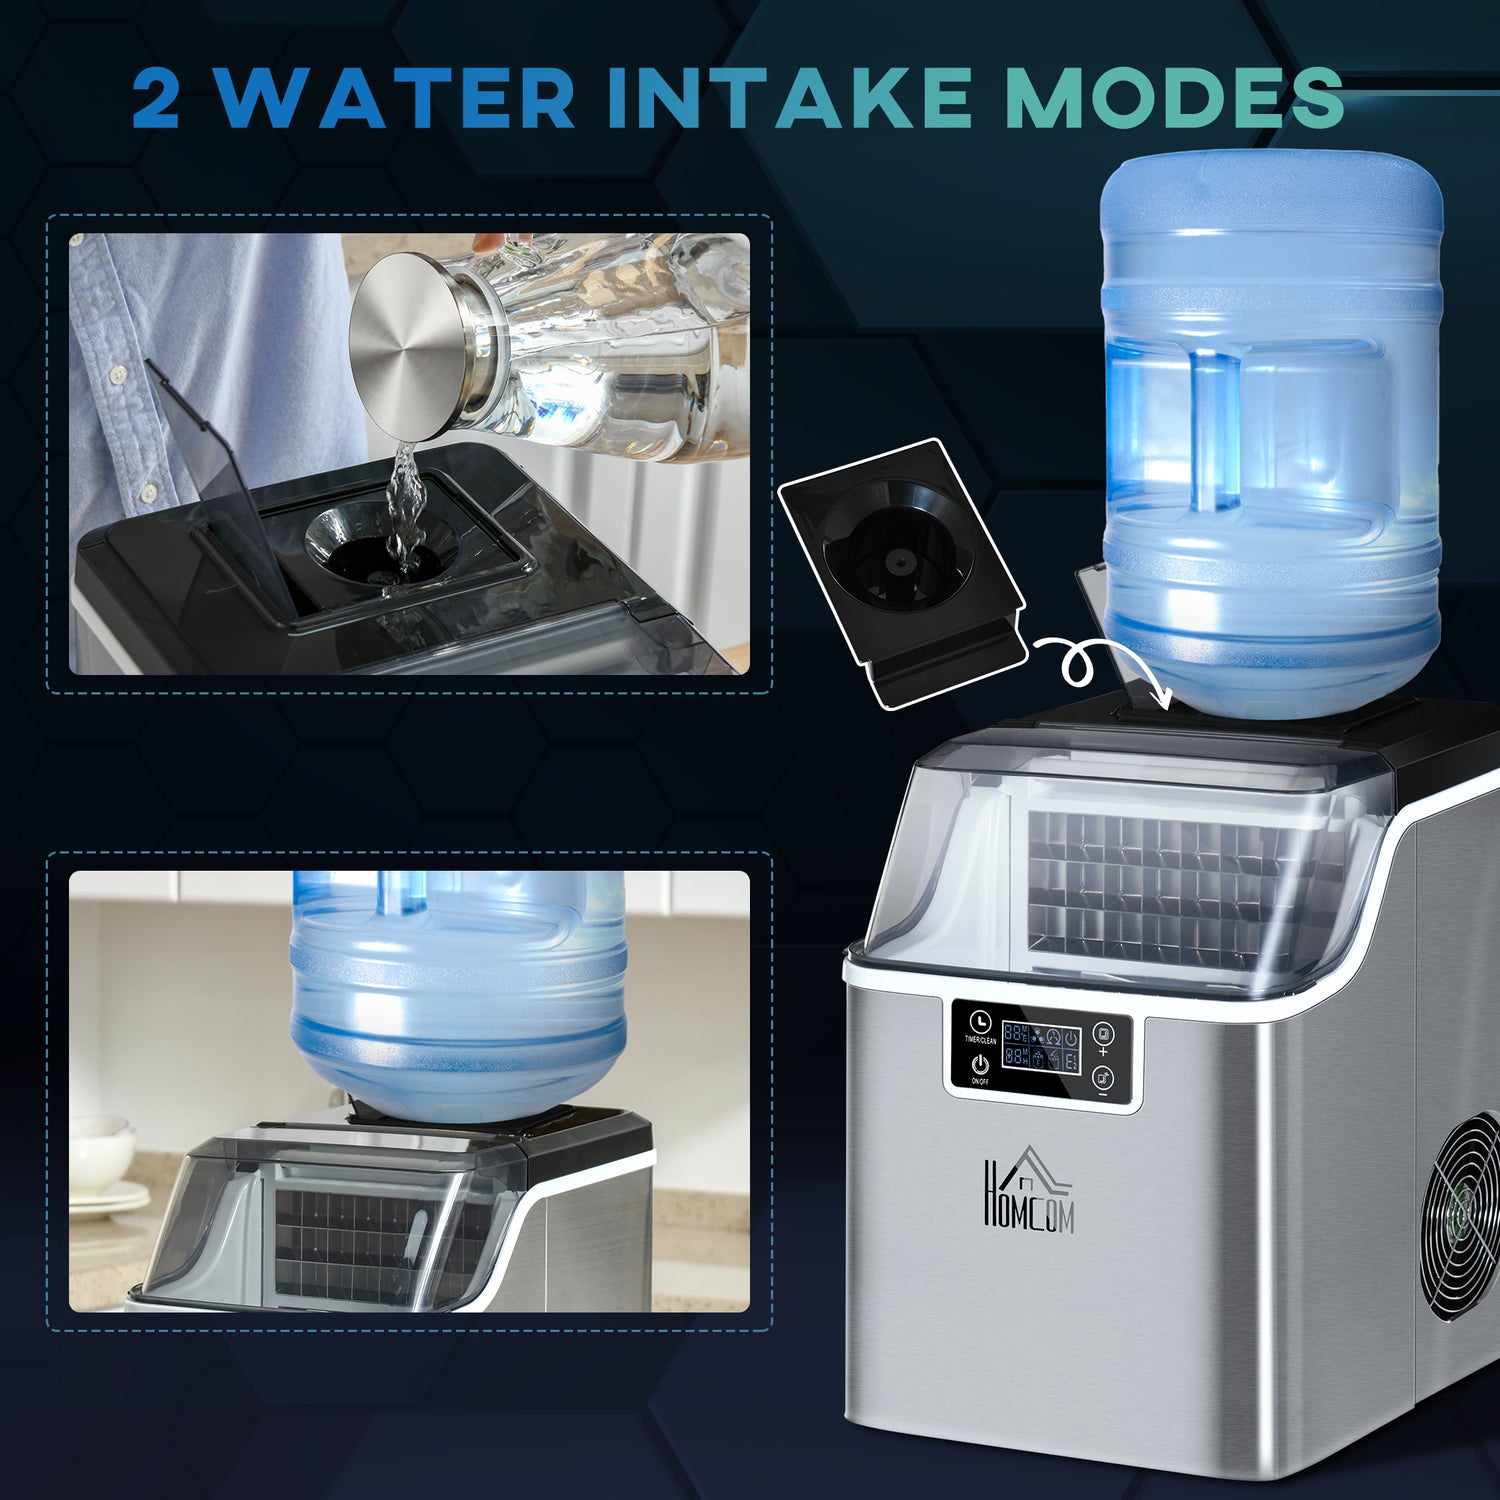 Thermostar Tsicebnhsc26aq 26-Pound Automatic Self-Cleaning Portable Countertop Ice Maker Machine, Aqua, Blue